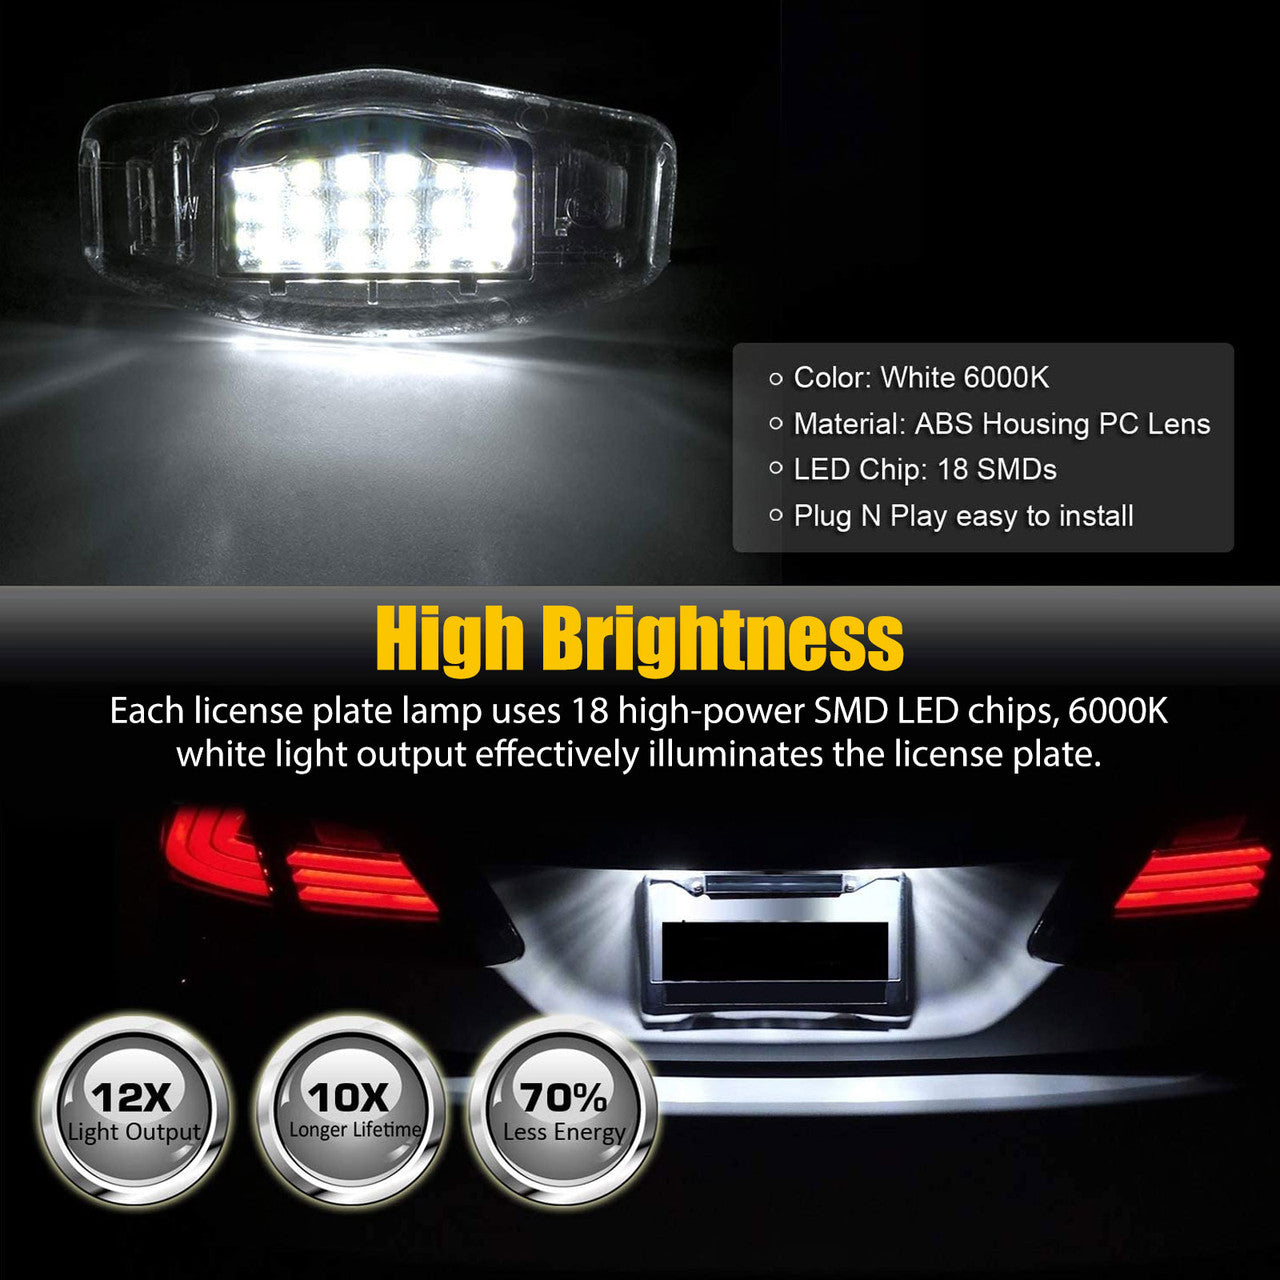 LED License Plate Bulbs for Honda Acura - Bright White LED Honda Civic Accord Sedan Pilot Adyssey MDX RL TL TSX ILX RDX 2001, 2002, 2003,2004,2005, 2013-2018